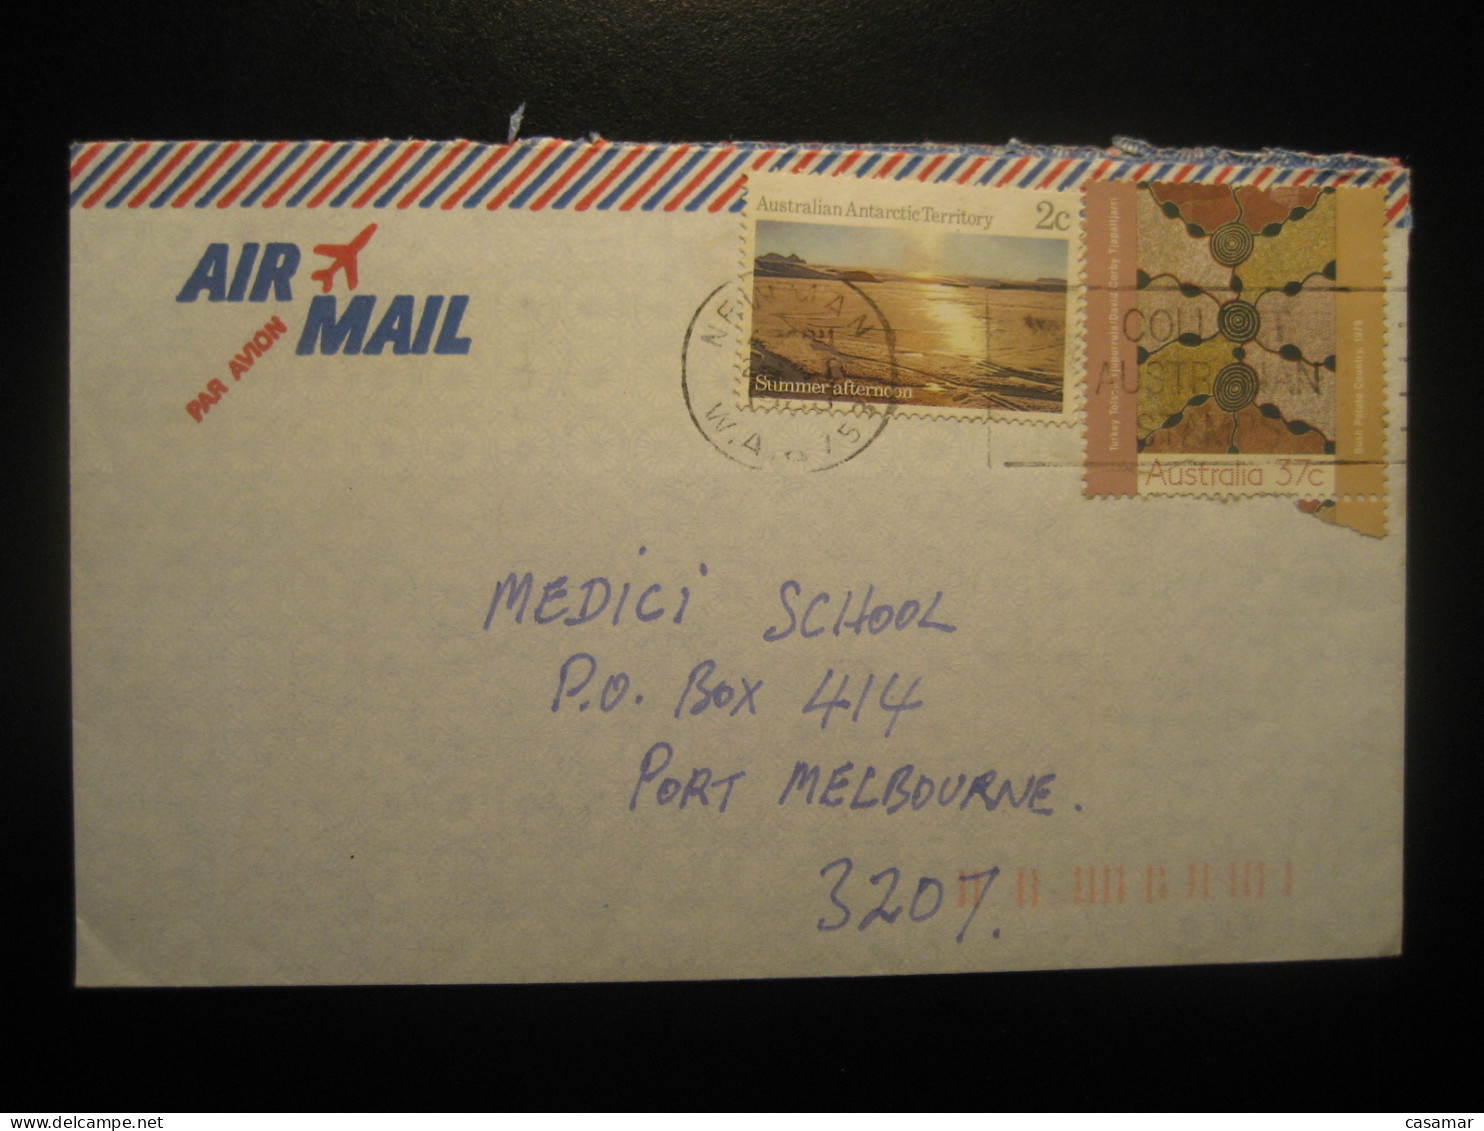 NEWMAN 198? Summer Afternoon Cancel Air Mail Cover AAT Australian Antarctic Territory Antarctics Antarctica - Lettres & Documents